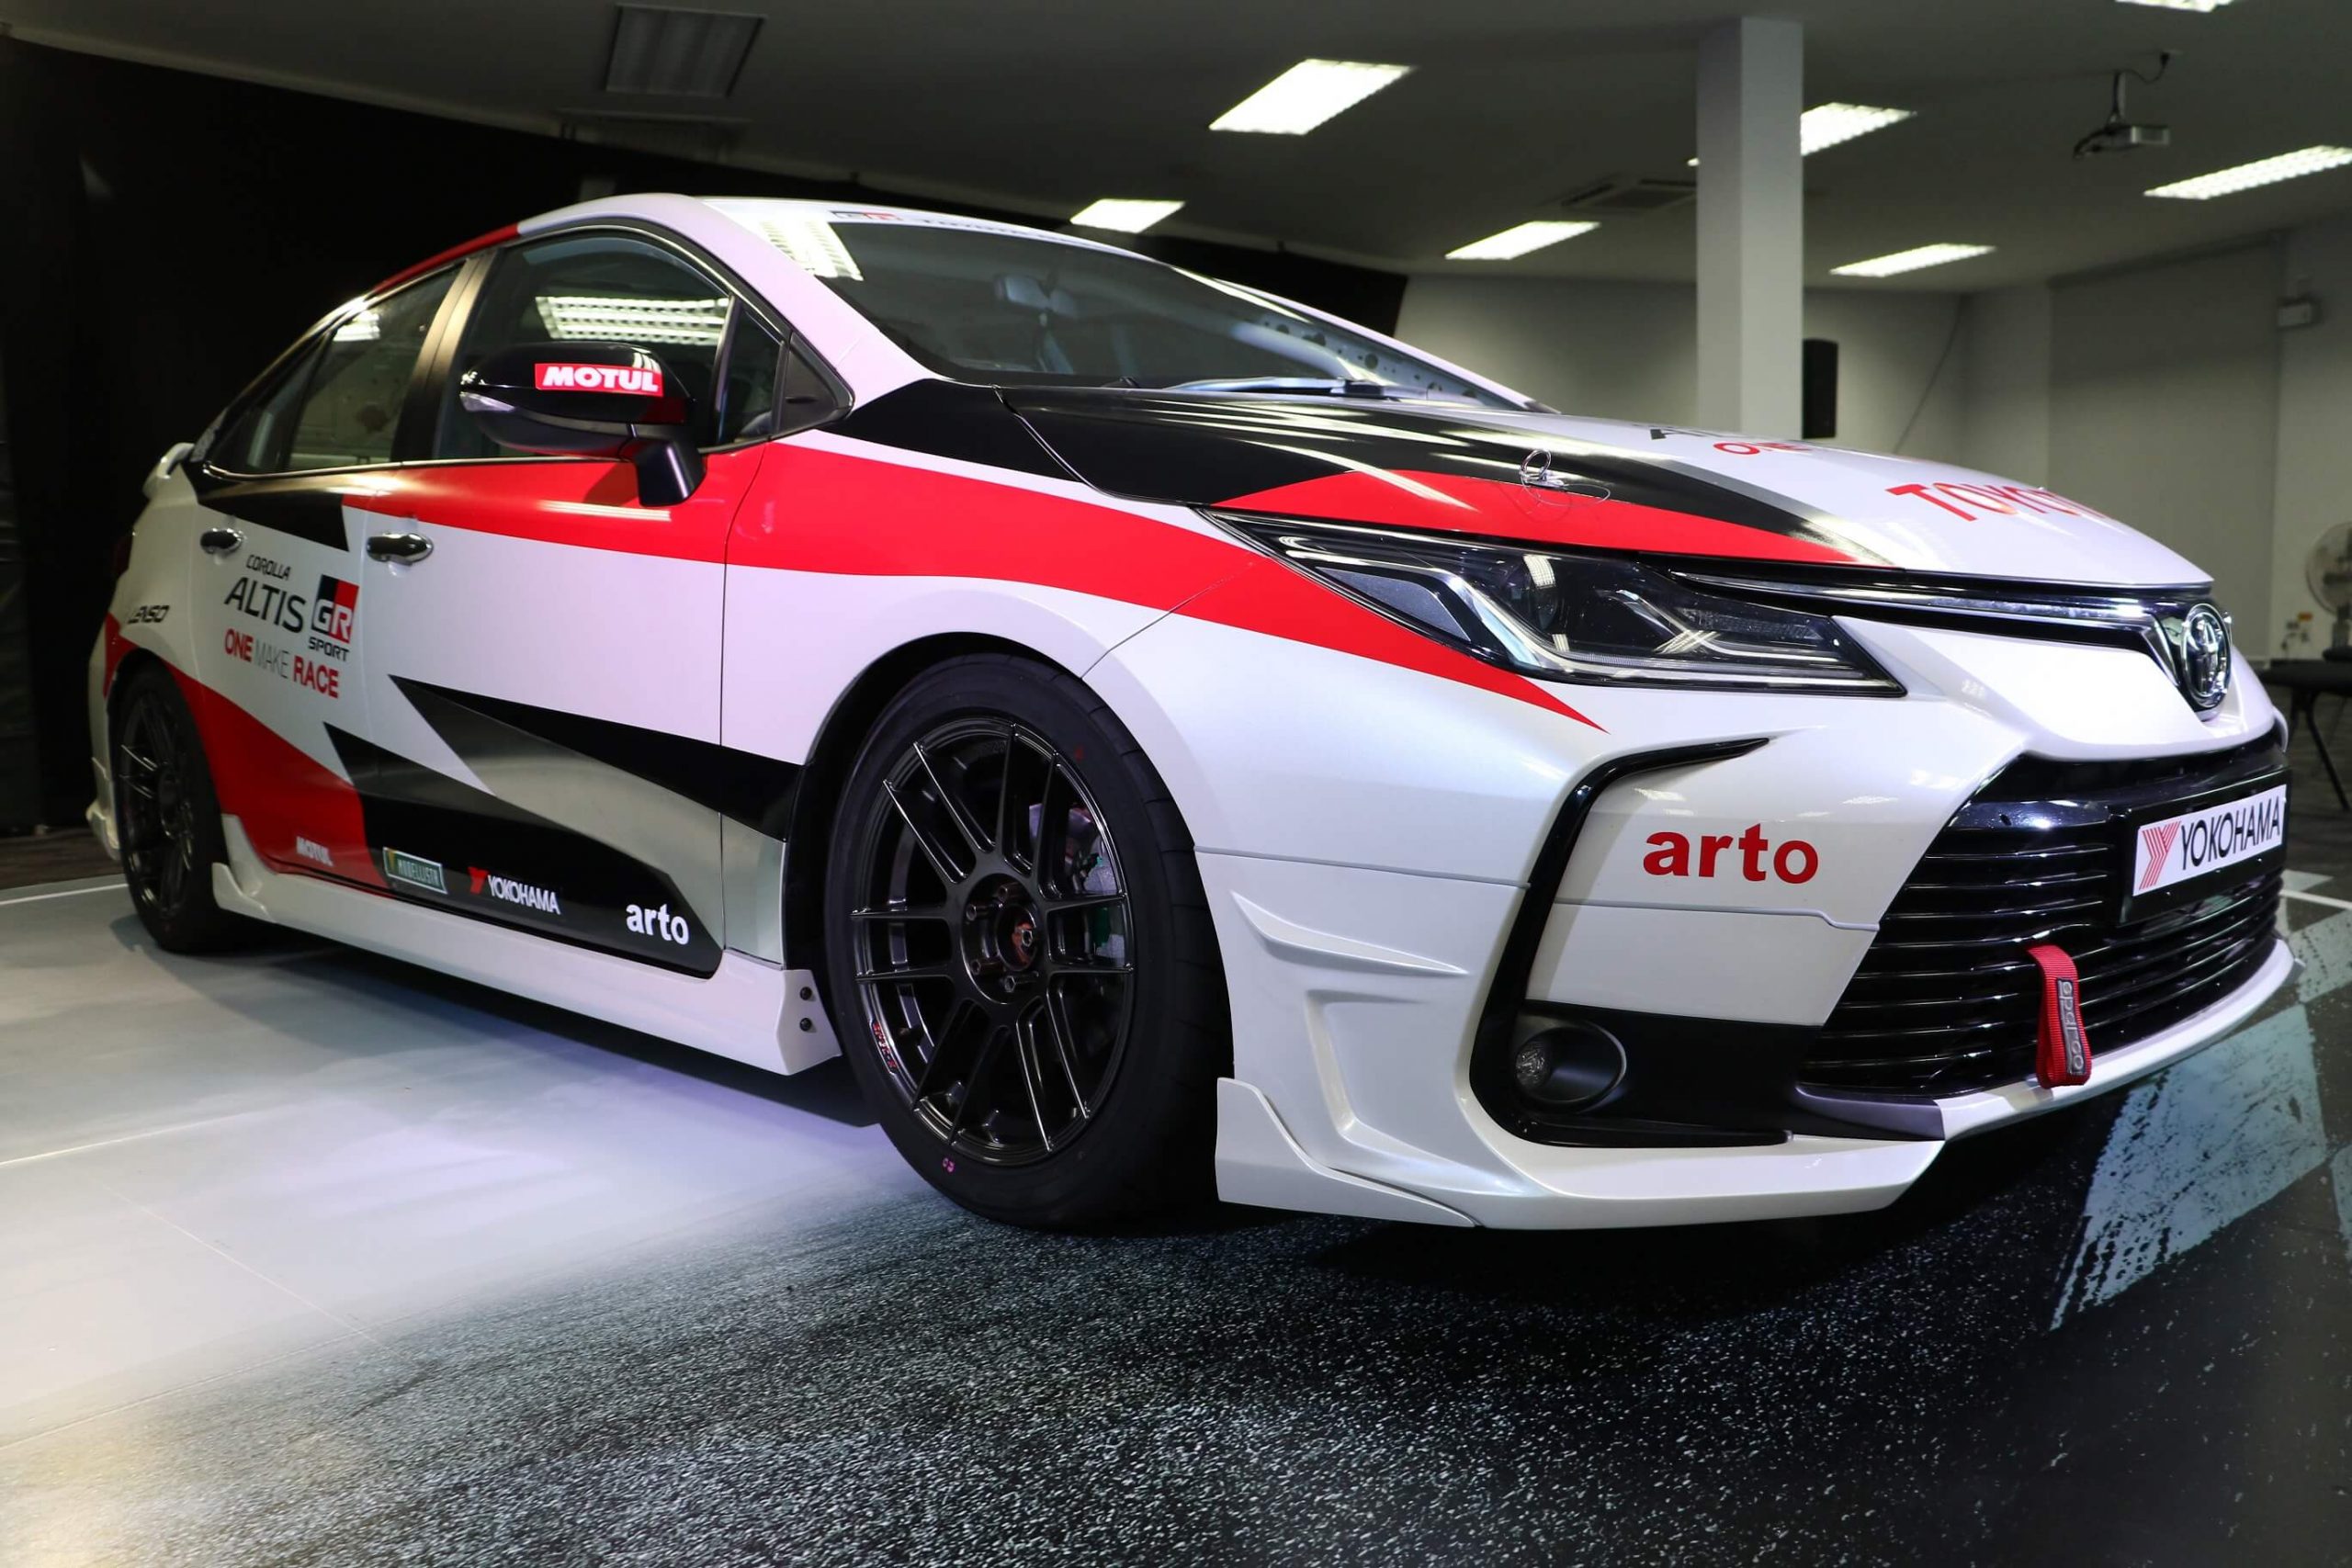 Toyota Gazoo Racing Motorsport 2020 ความกล้าที่จะข้ามขีดจำกัด...Spirit to push the limit